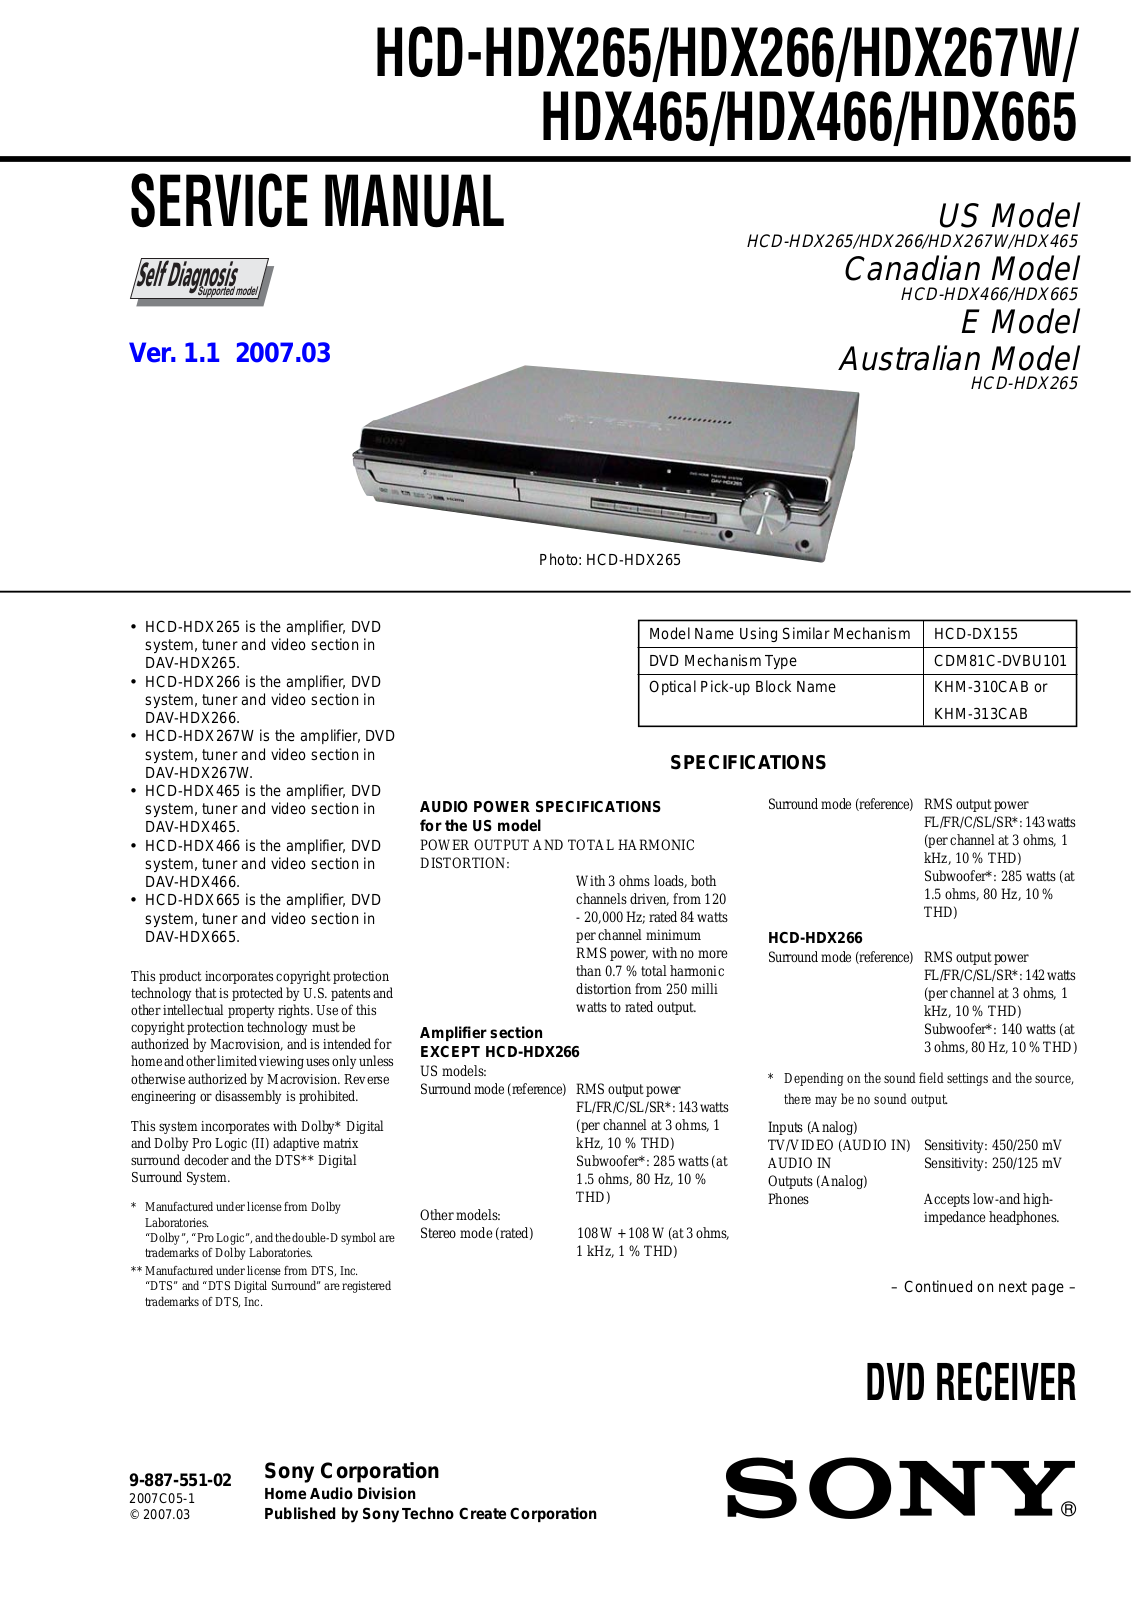 Sony HCDHDX-265, HCDHDX-267-W, HCDHDX-266, HCDHDX-465, HCDHDX-466 Service manual